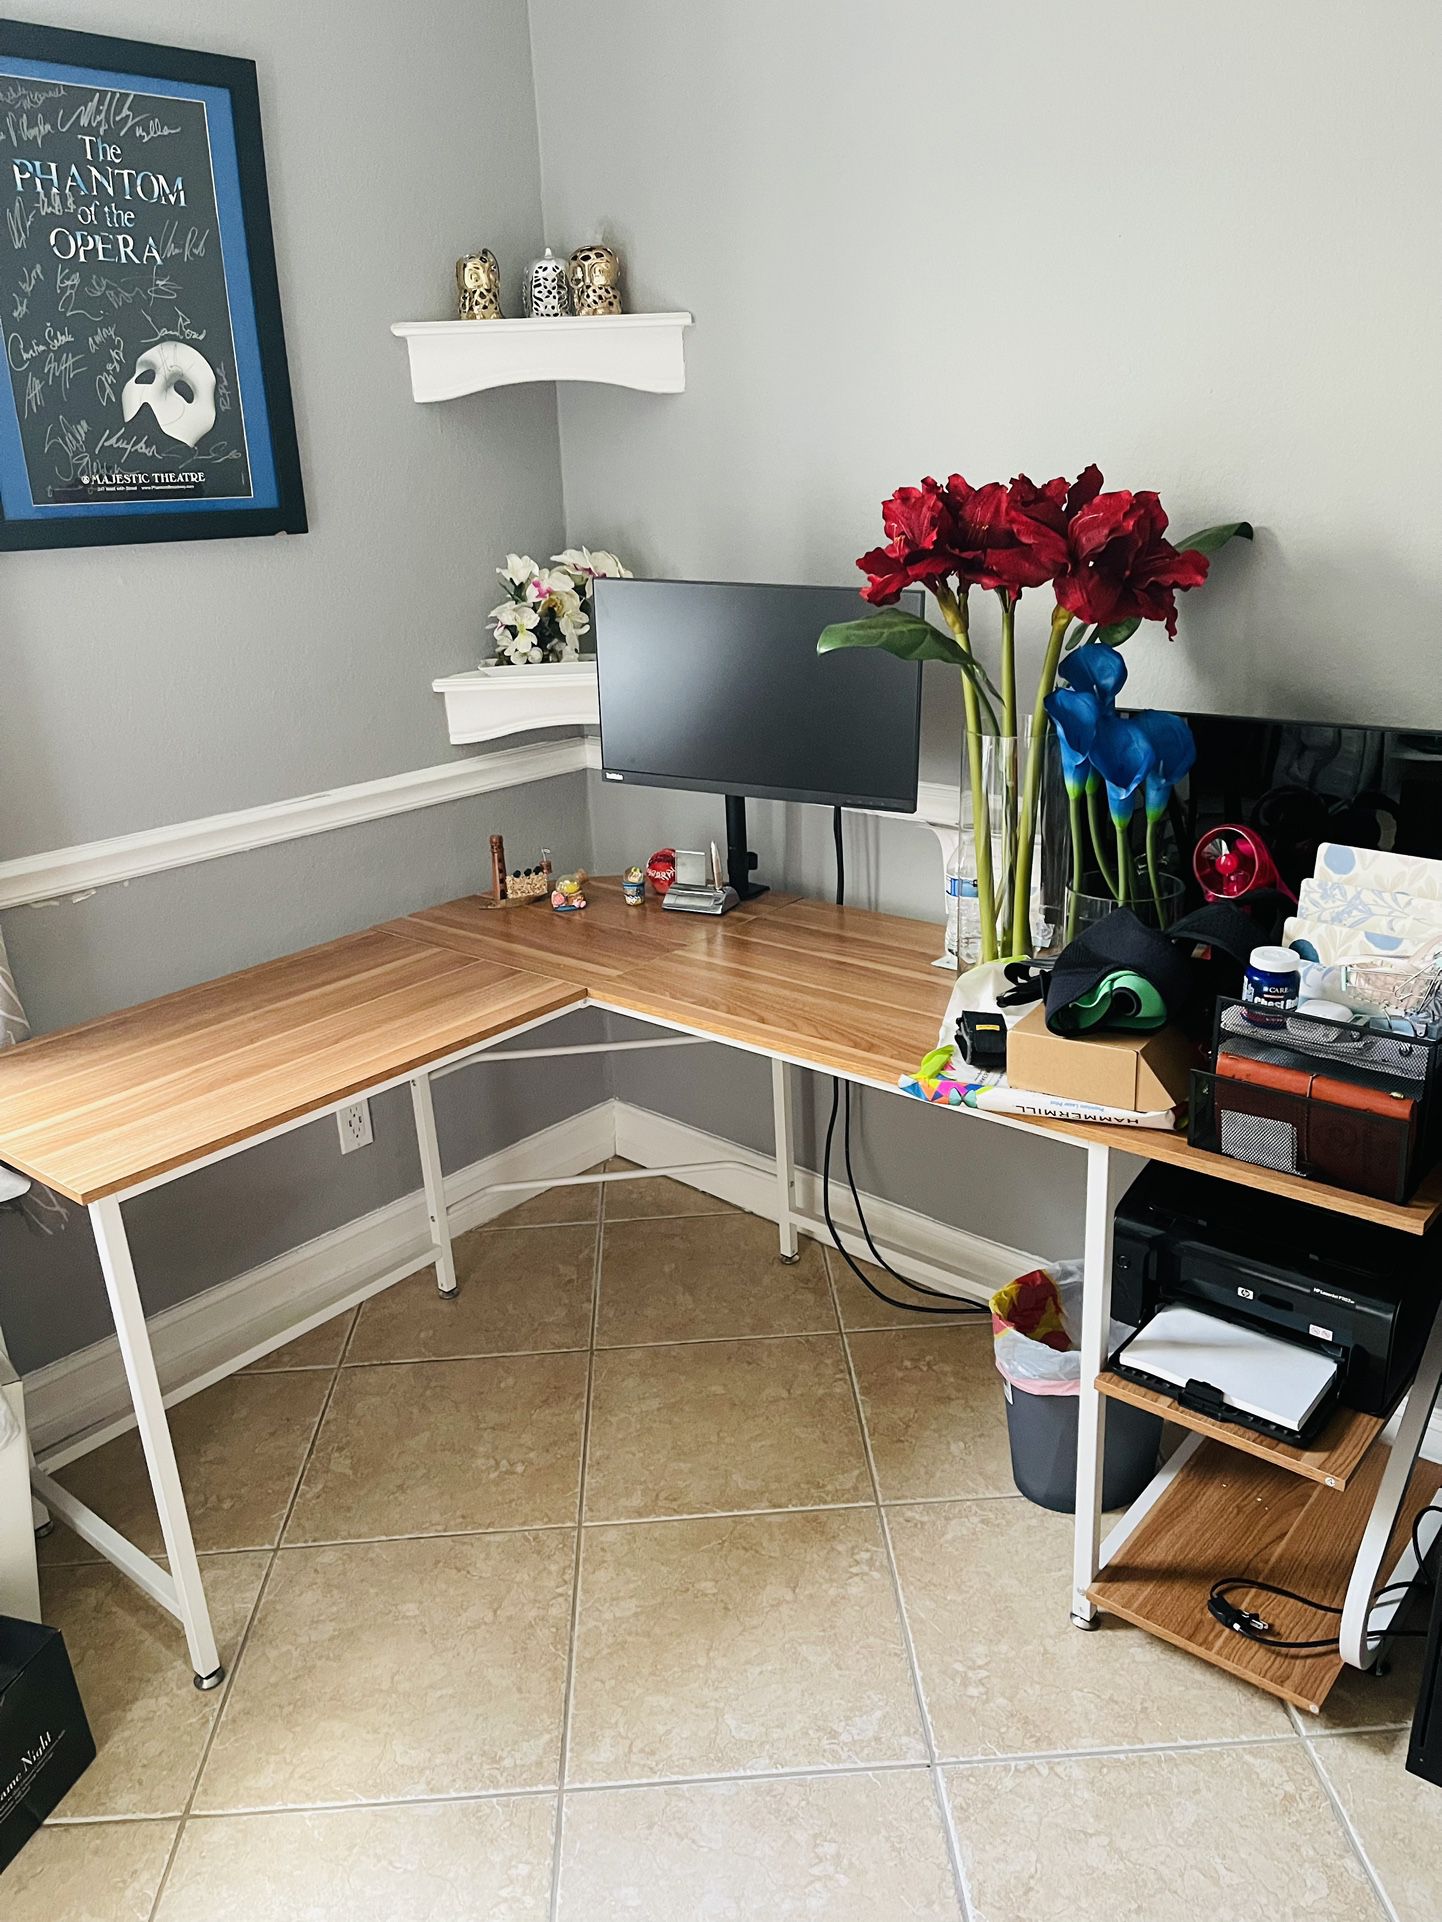 L Shaped Computer Desk